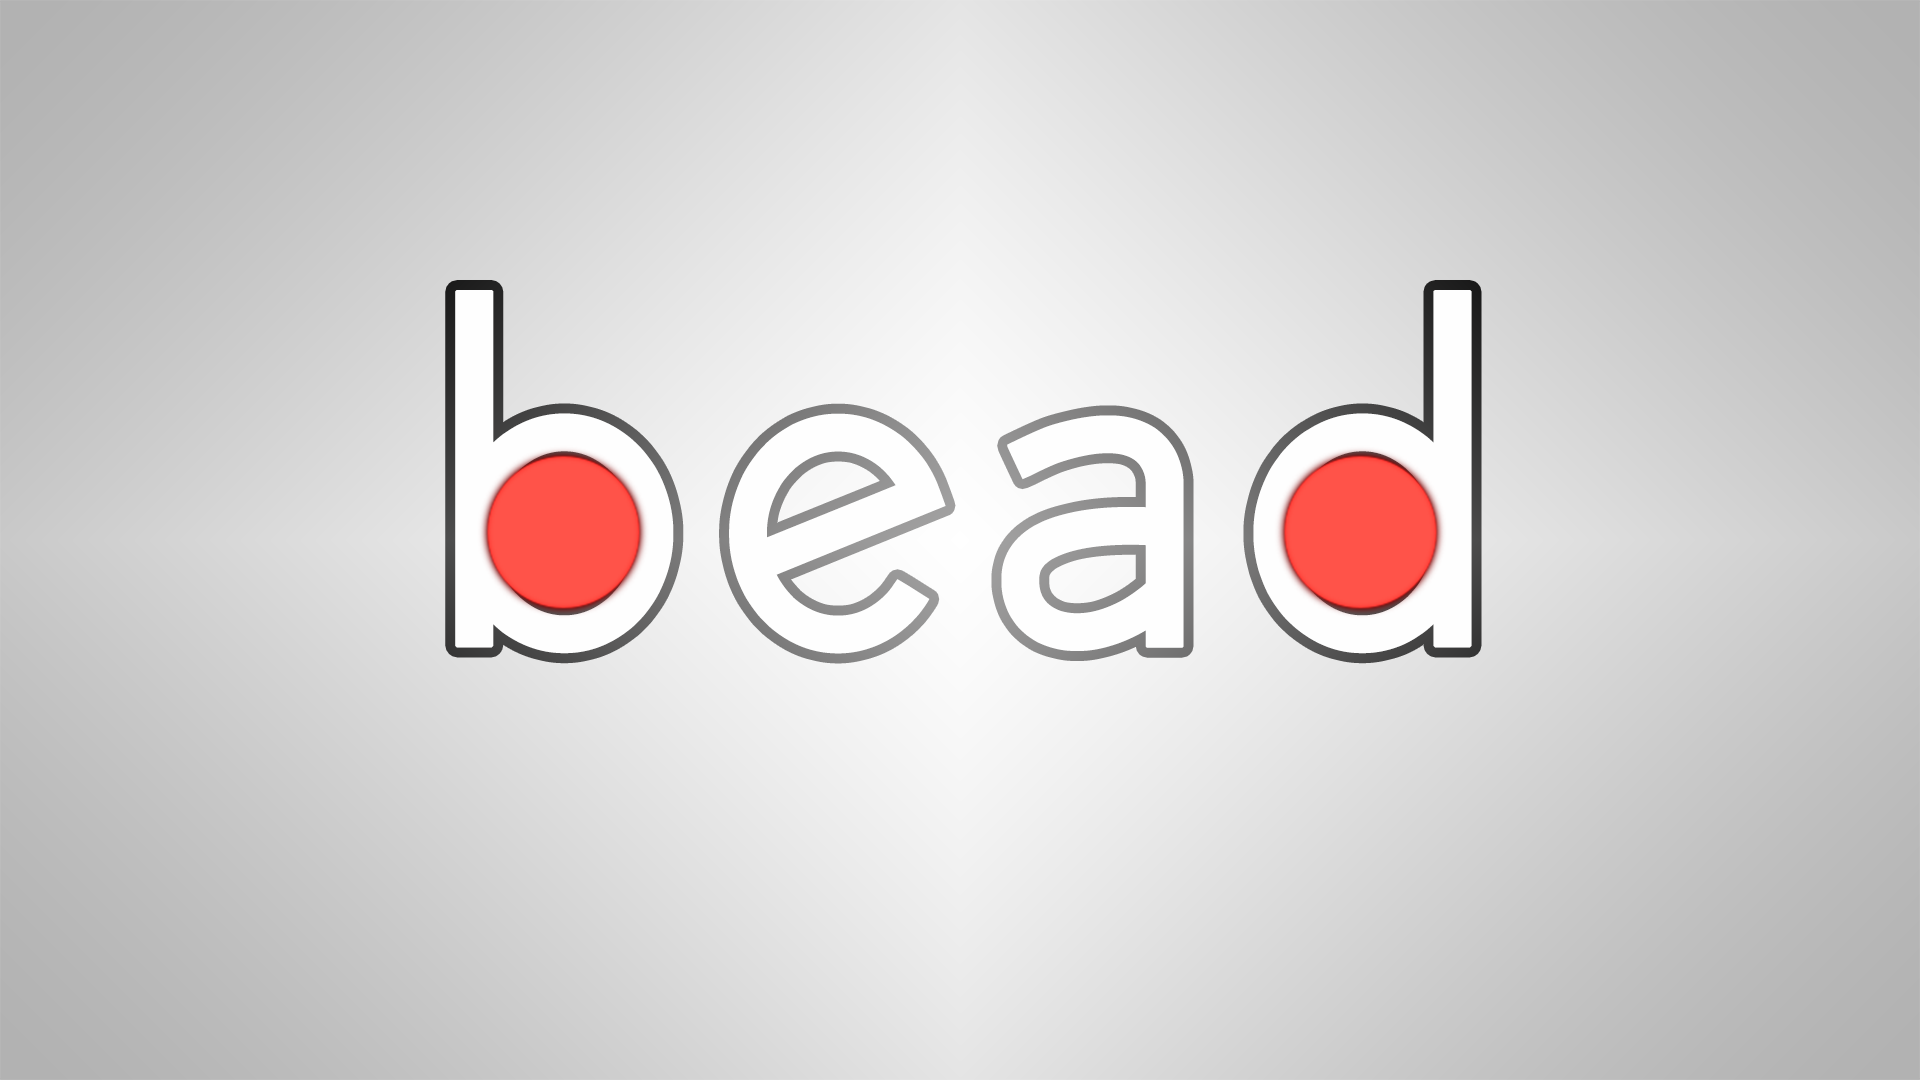 bead